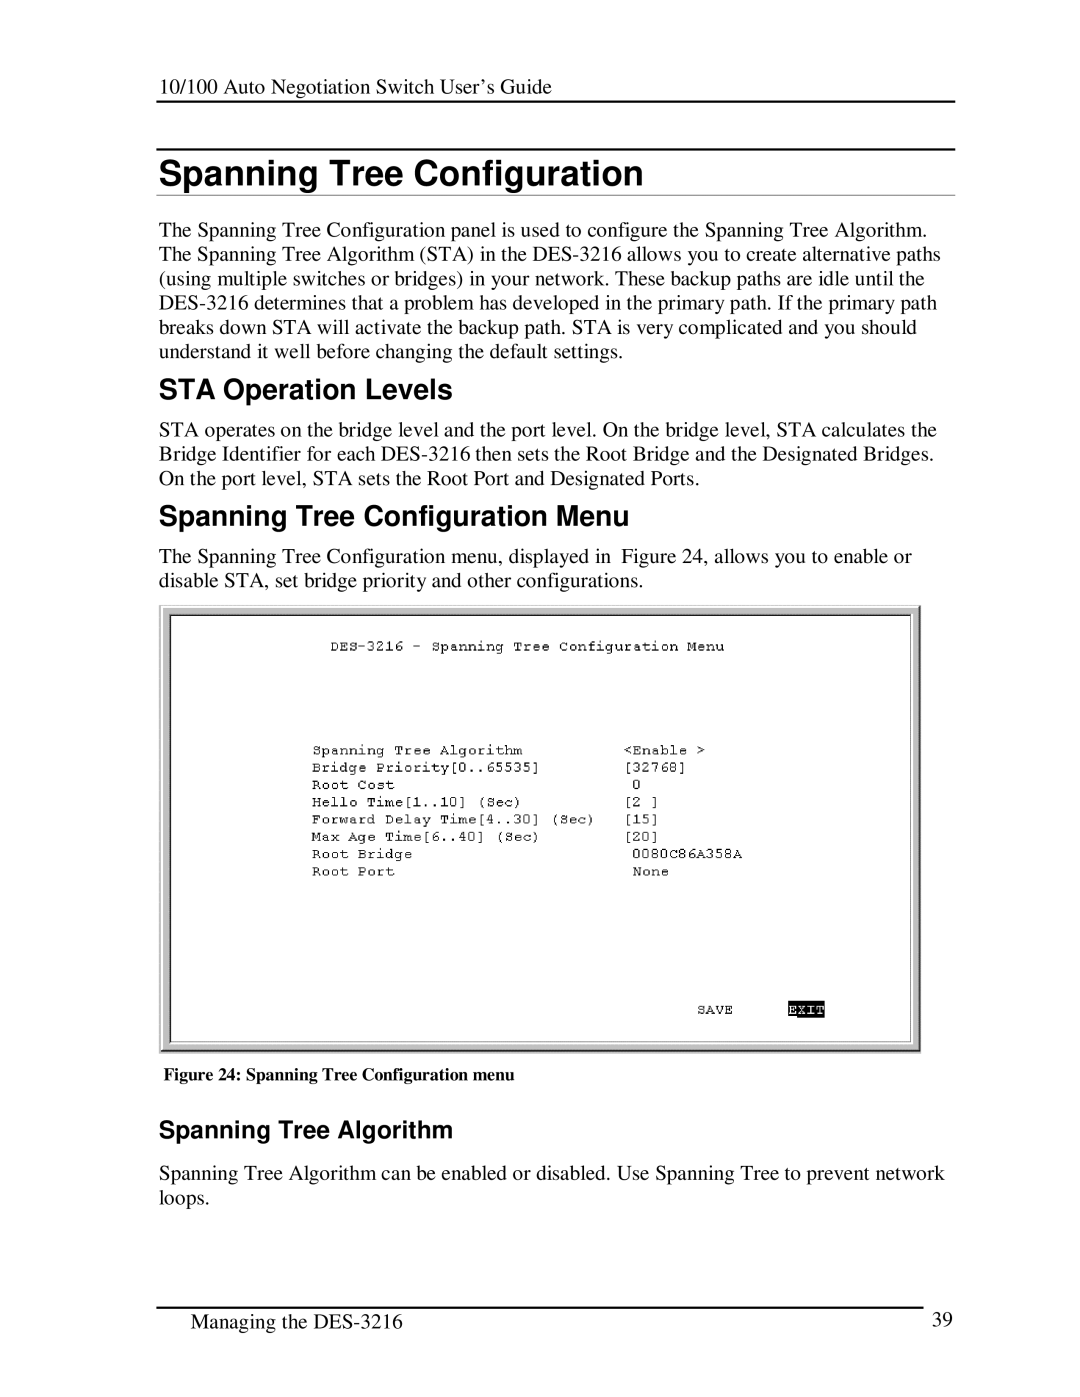 D-Link DES-3216 manual STA Operation Levels, Spanning Tree Configuration Menu, Spanning Tree Algorithm 